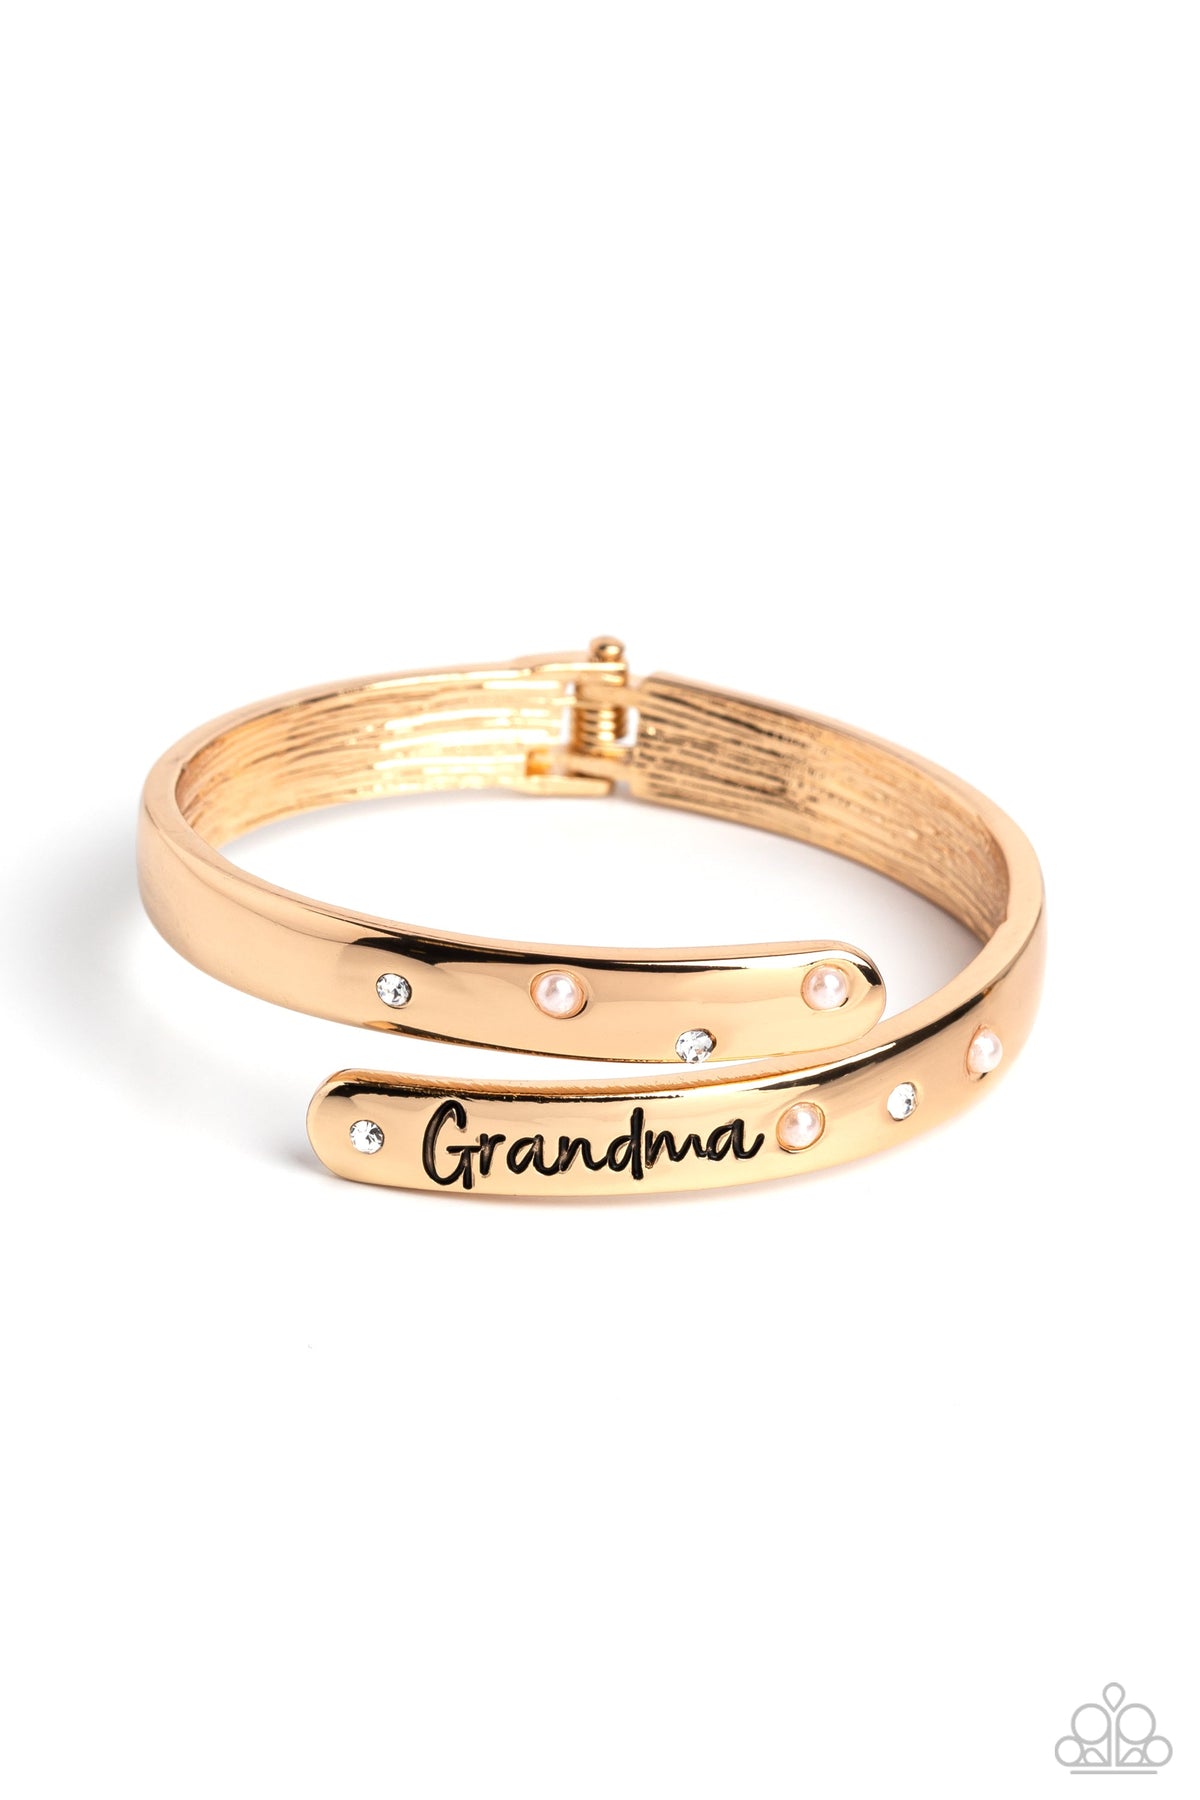 Gorgeous Grandma Gold Inspirational Bracelet- lightbox - CarasShop.com - $5 Jewelry by Cara Jewels